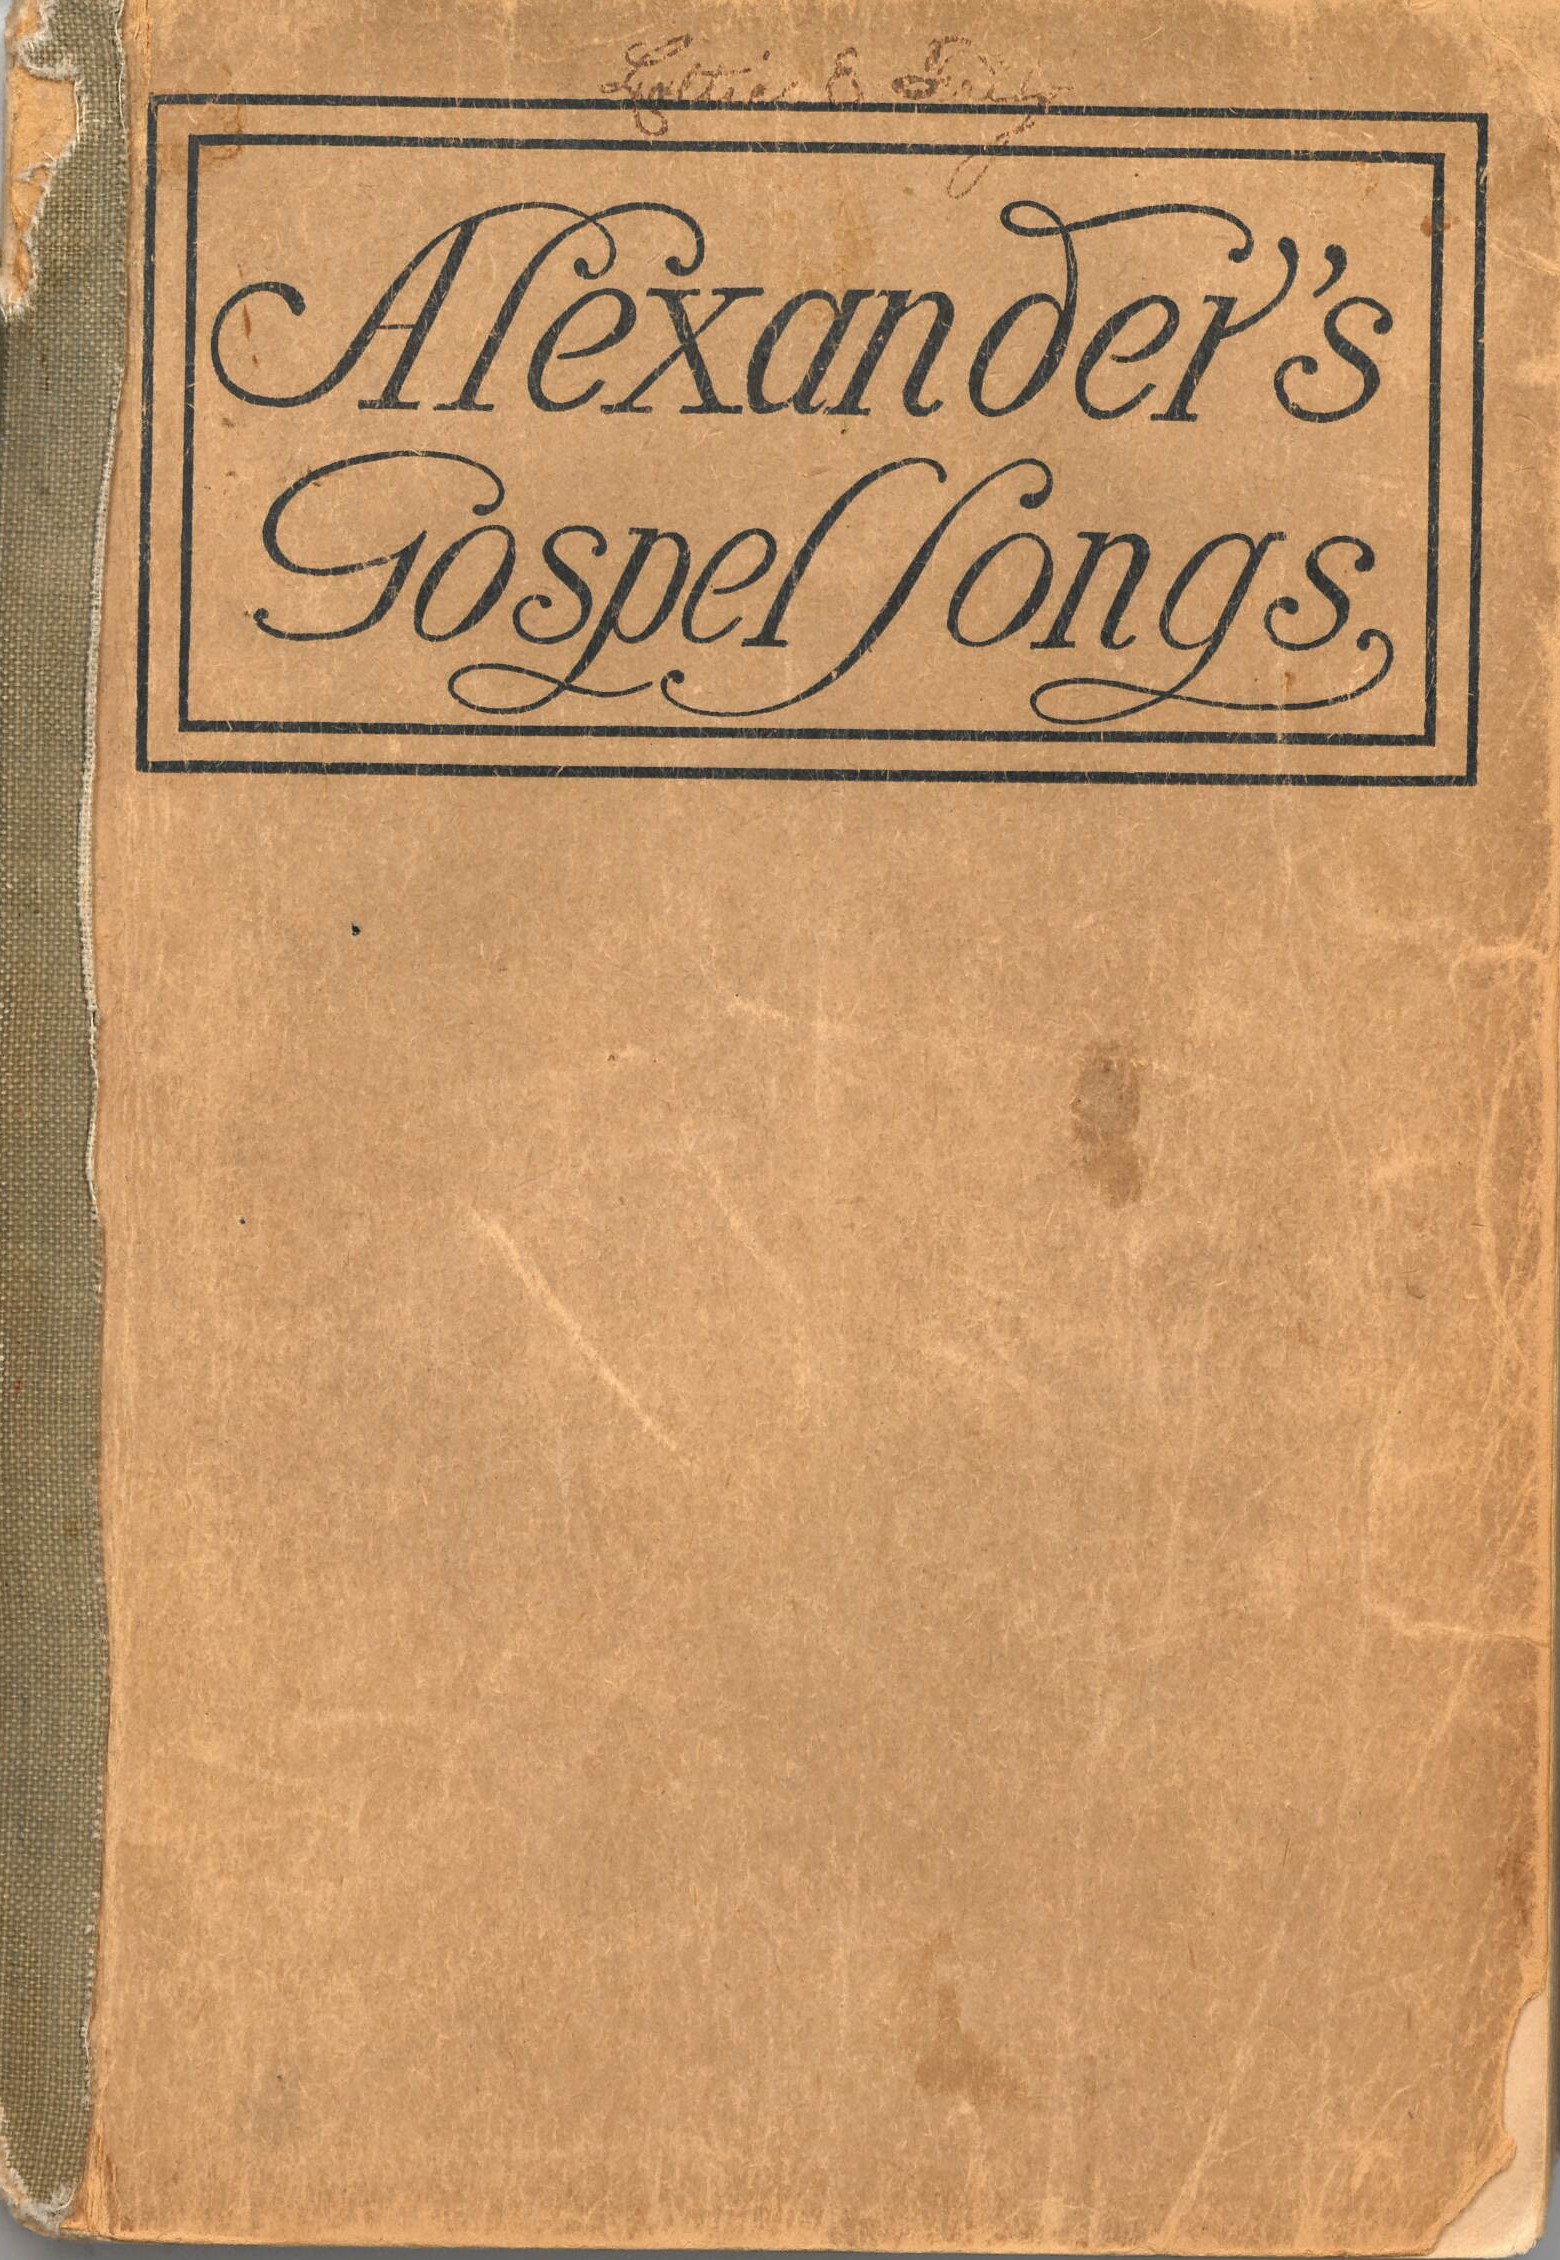 Alexander’s Gospel Songs. Charles M. Alexander, Compiler. Fleming H. Revell Company: New York, 1908. Front cover.